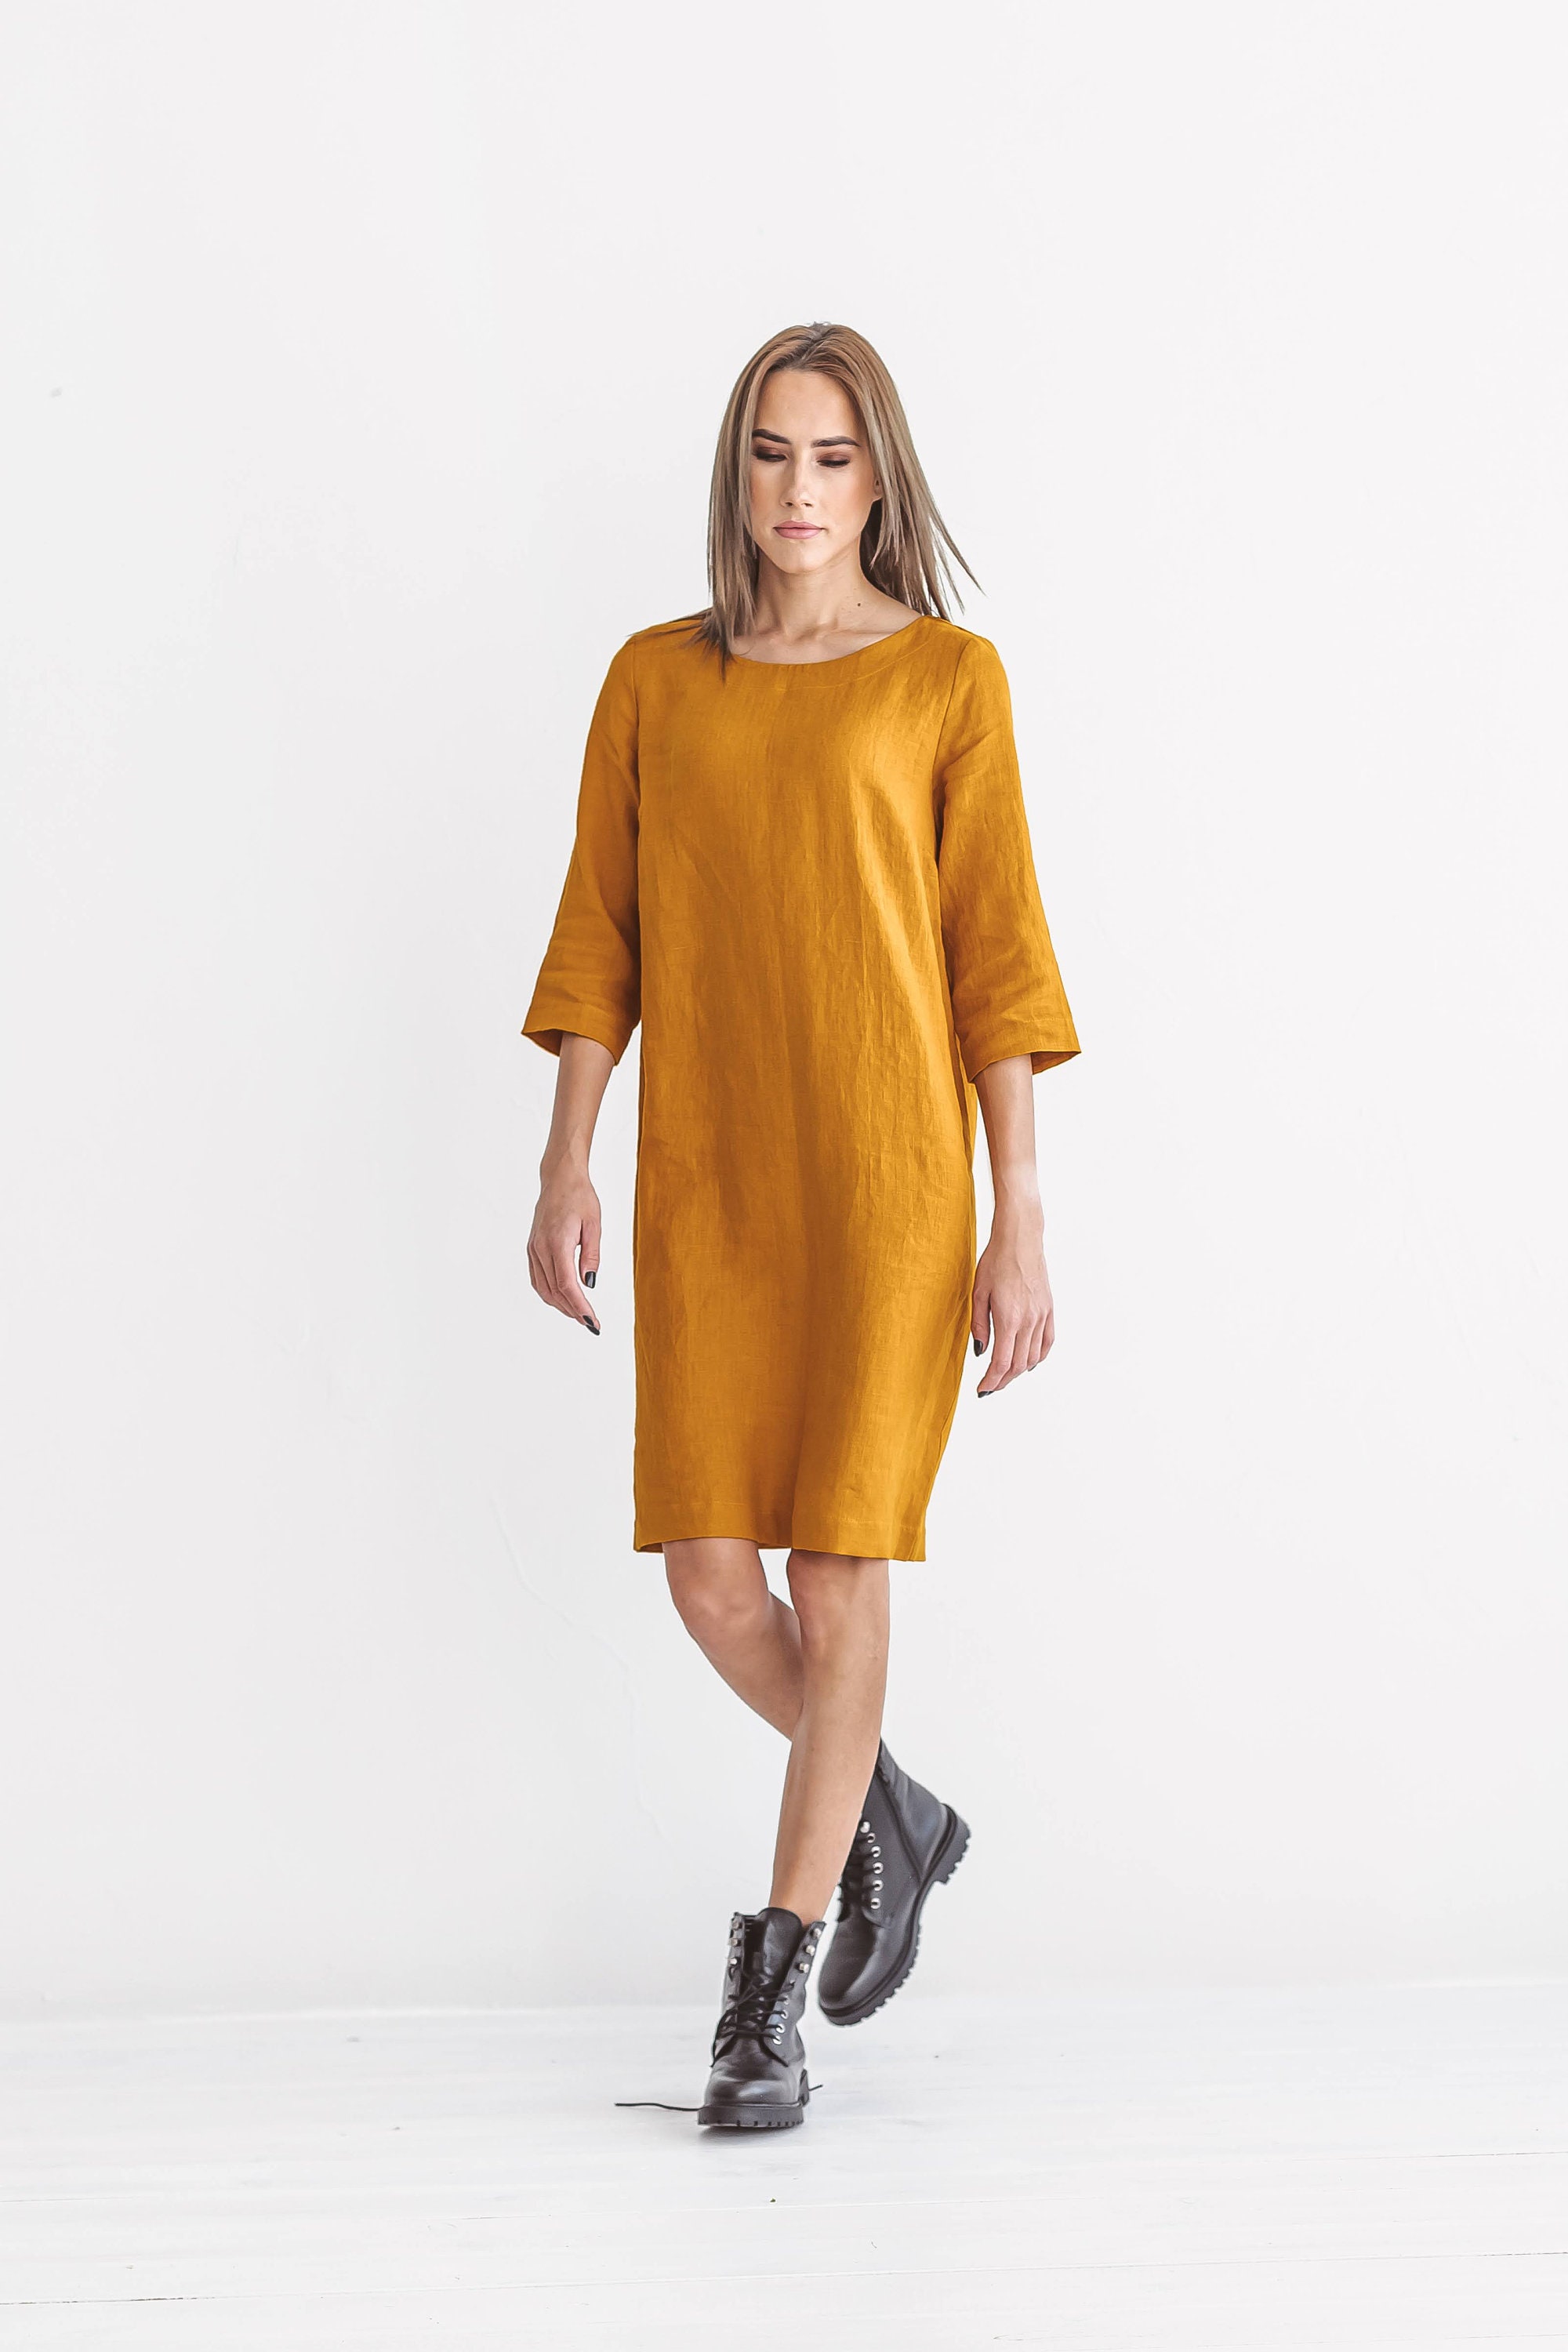 NANCY Linen Dress 3/4 Sleeves Mustard Yellow Summer Dress - Etsy